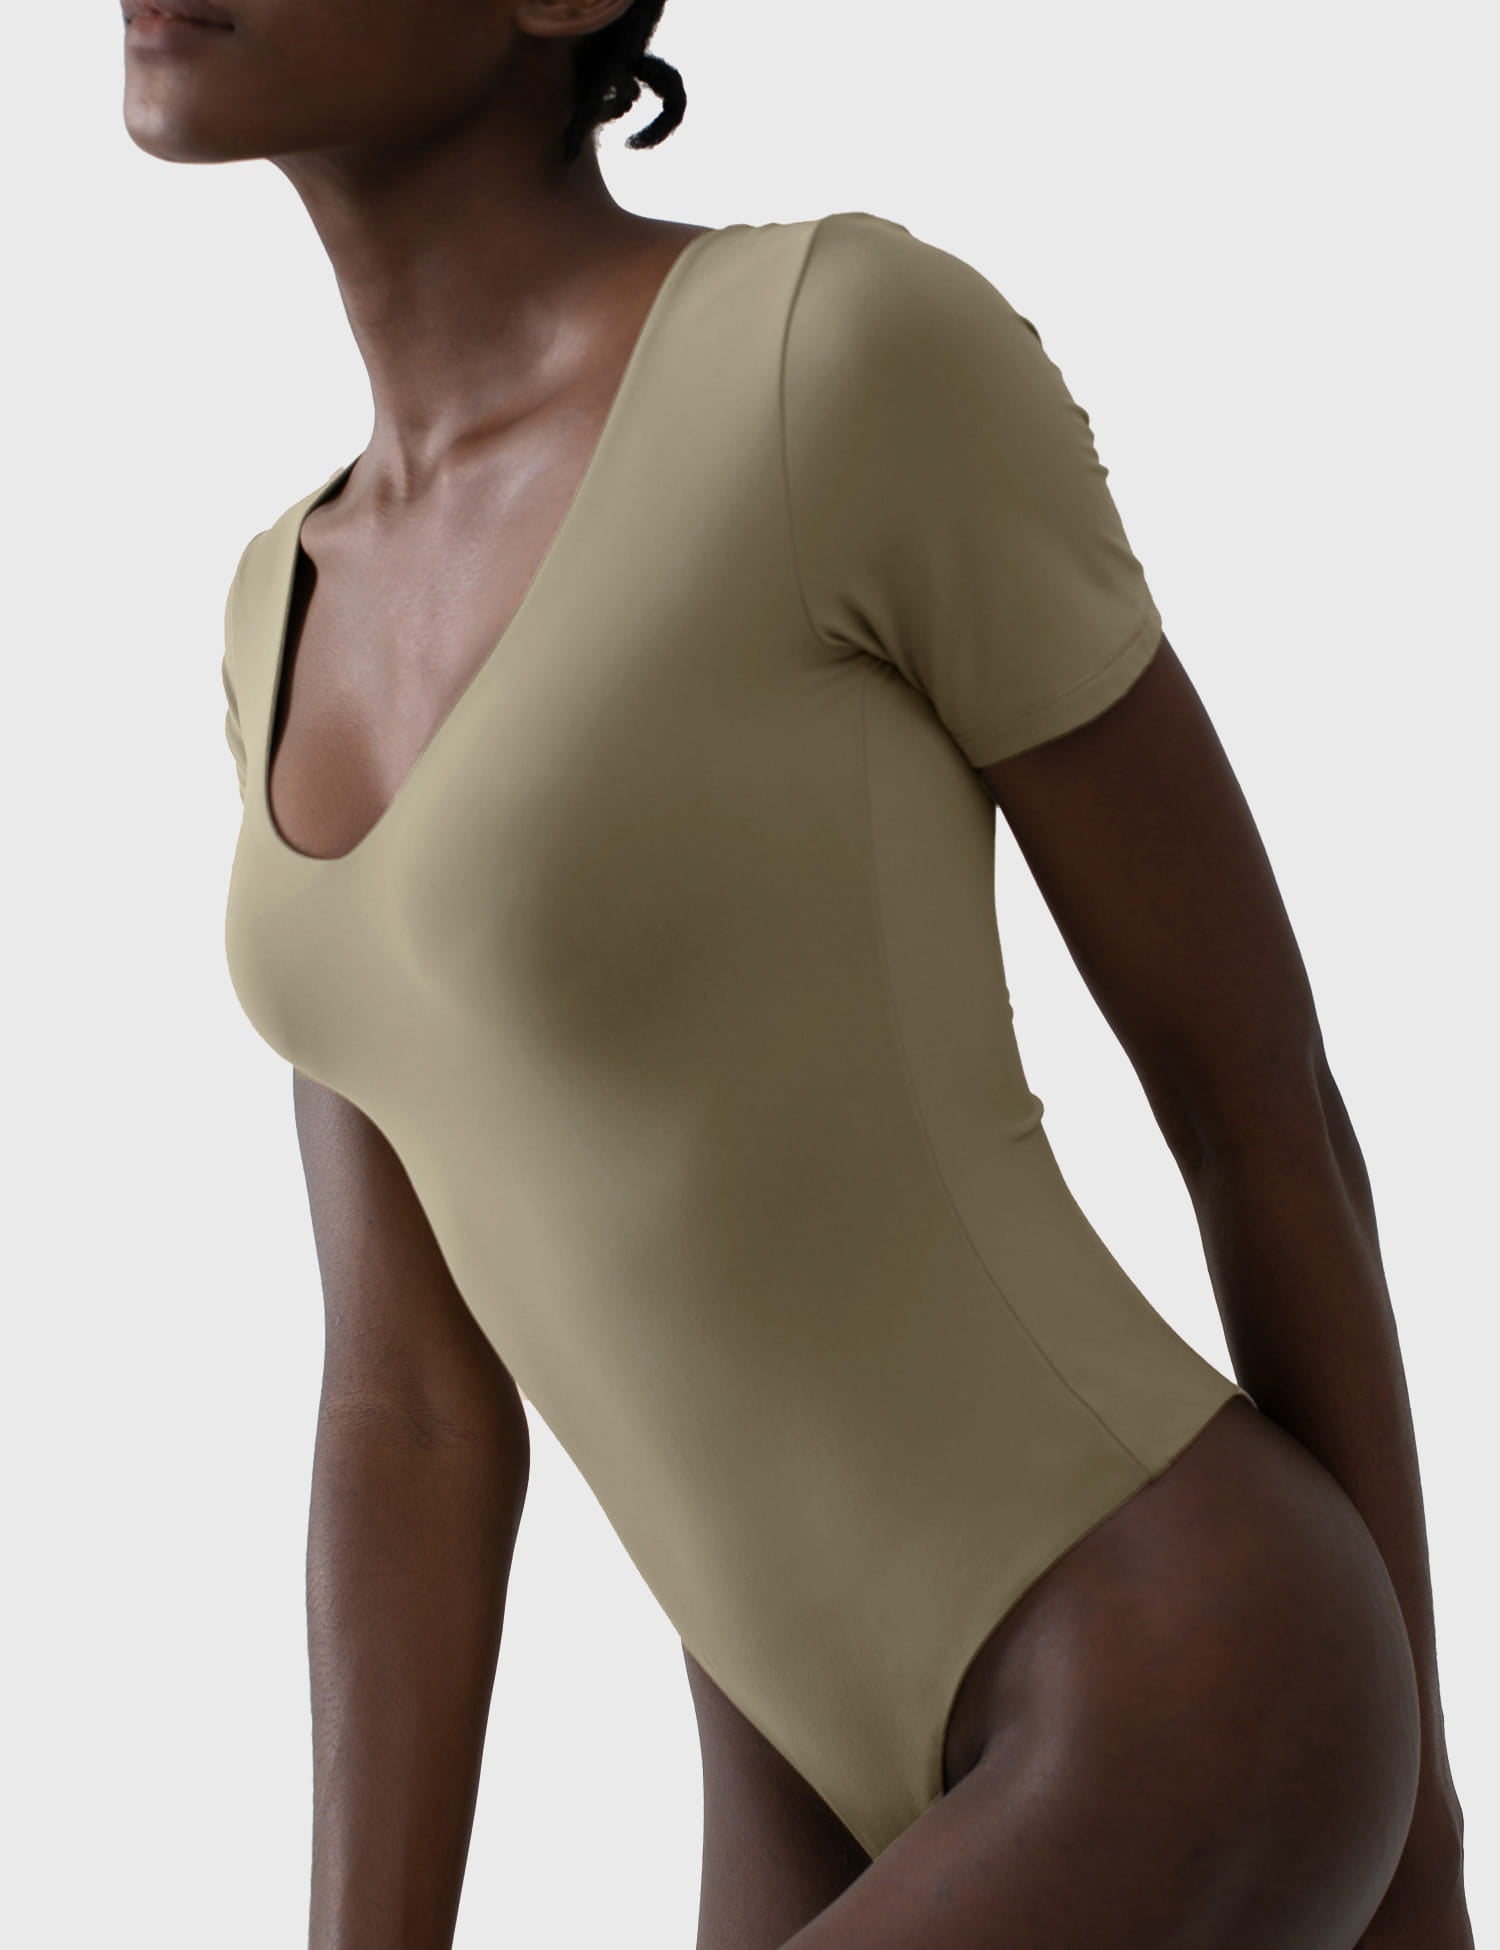 Pumiey Bodysuit Try On Size XL 14/16. It feels like butter on the